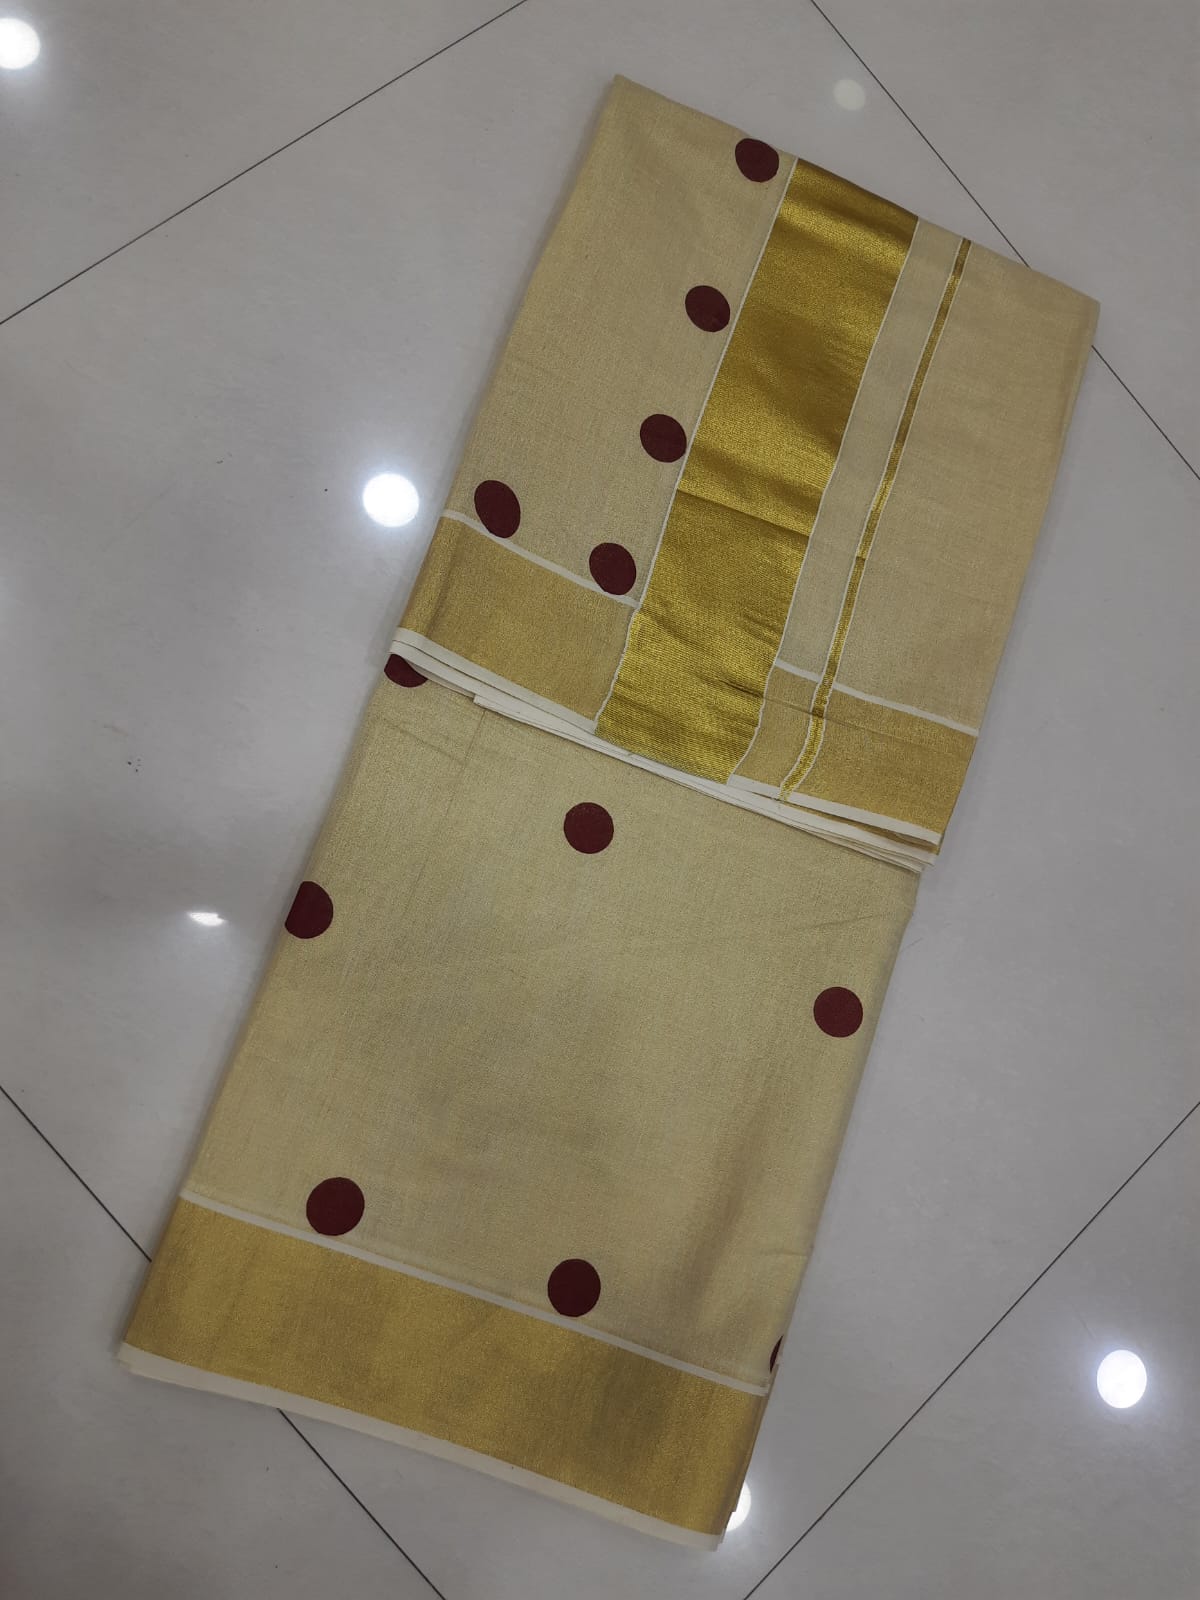 Tissue dot printed kerala saree